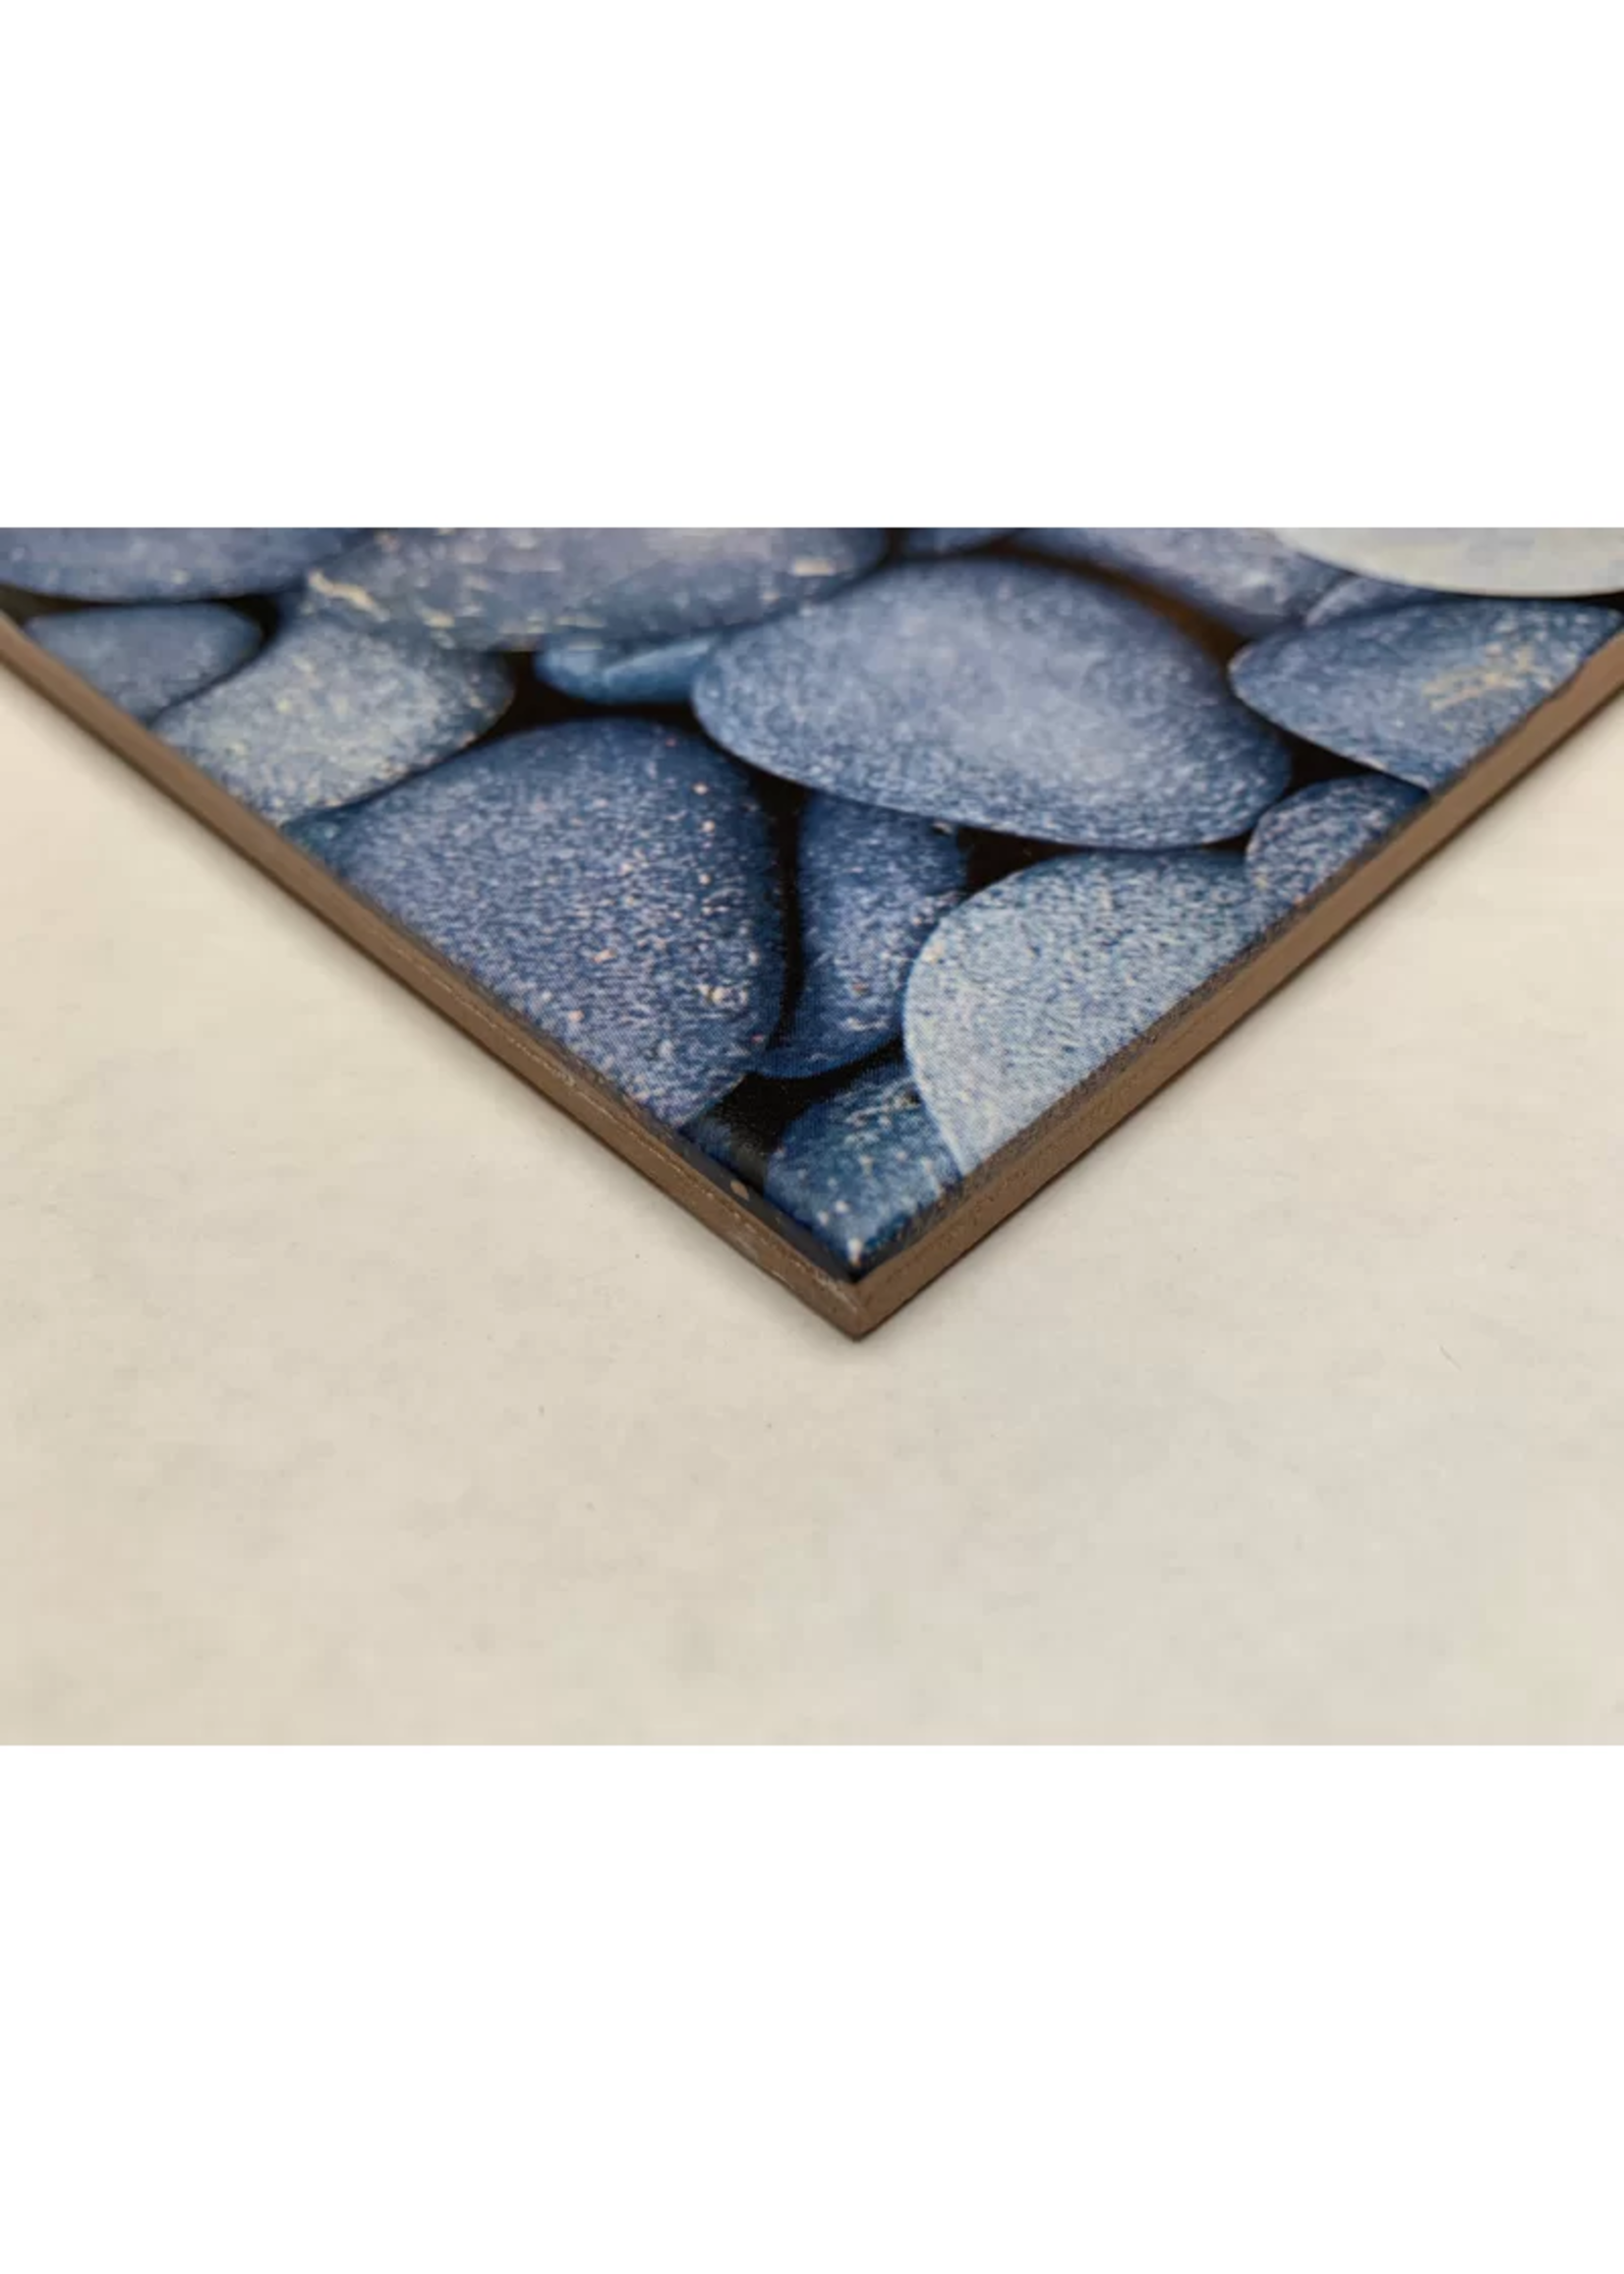 *7 sq ft River Rocks 8"x8" Ceramic Pebble Tile - Final Sale